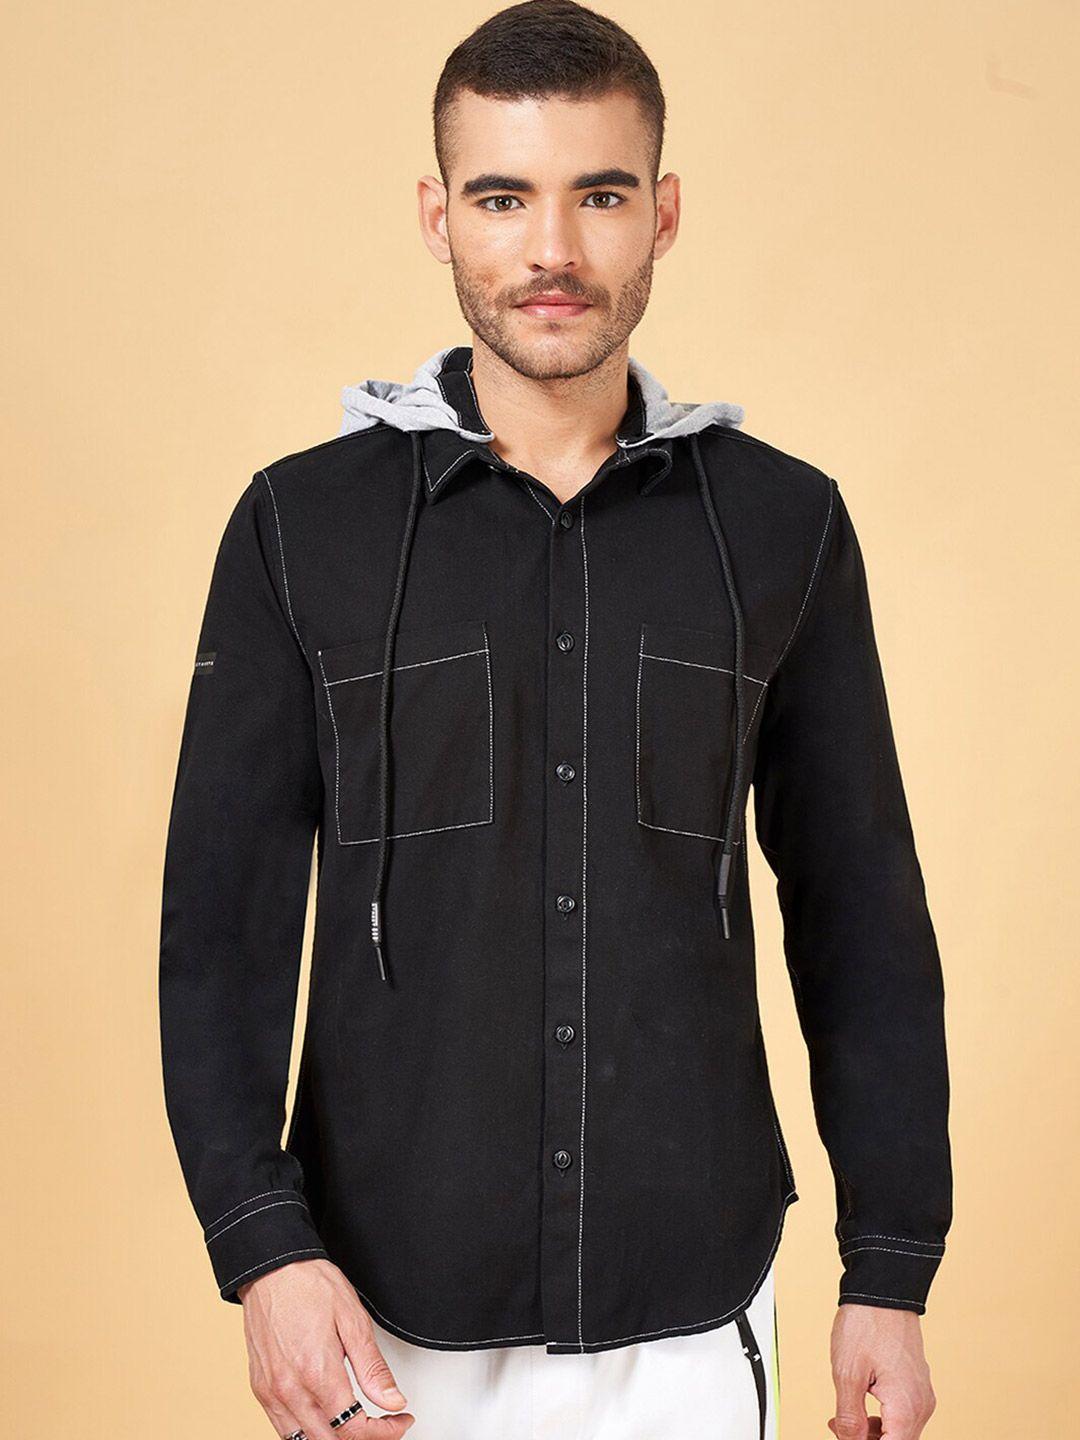 street 808 by pantaloons hooded long sleeves black cotton casual shirt